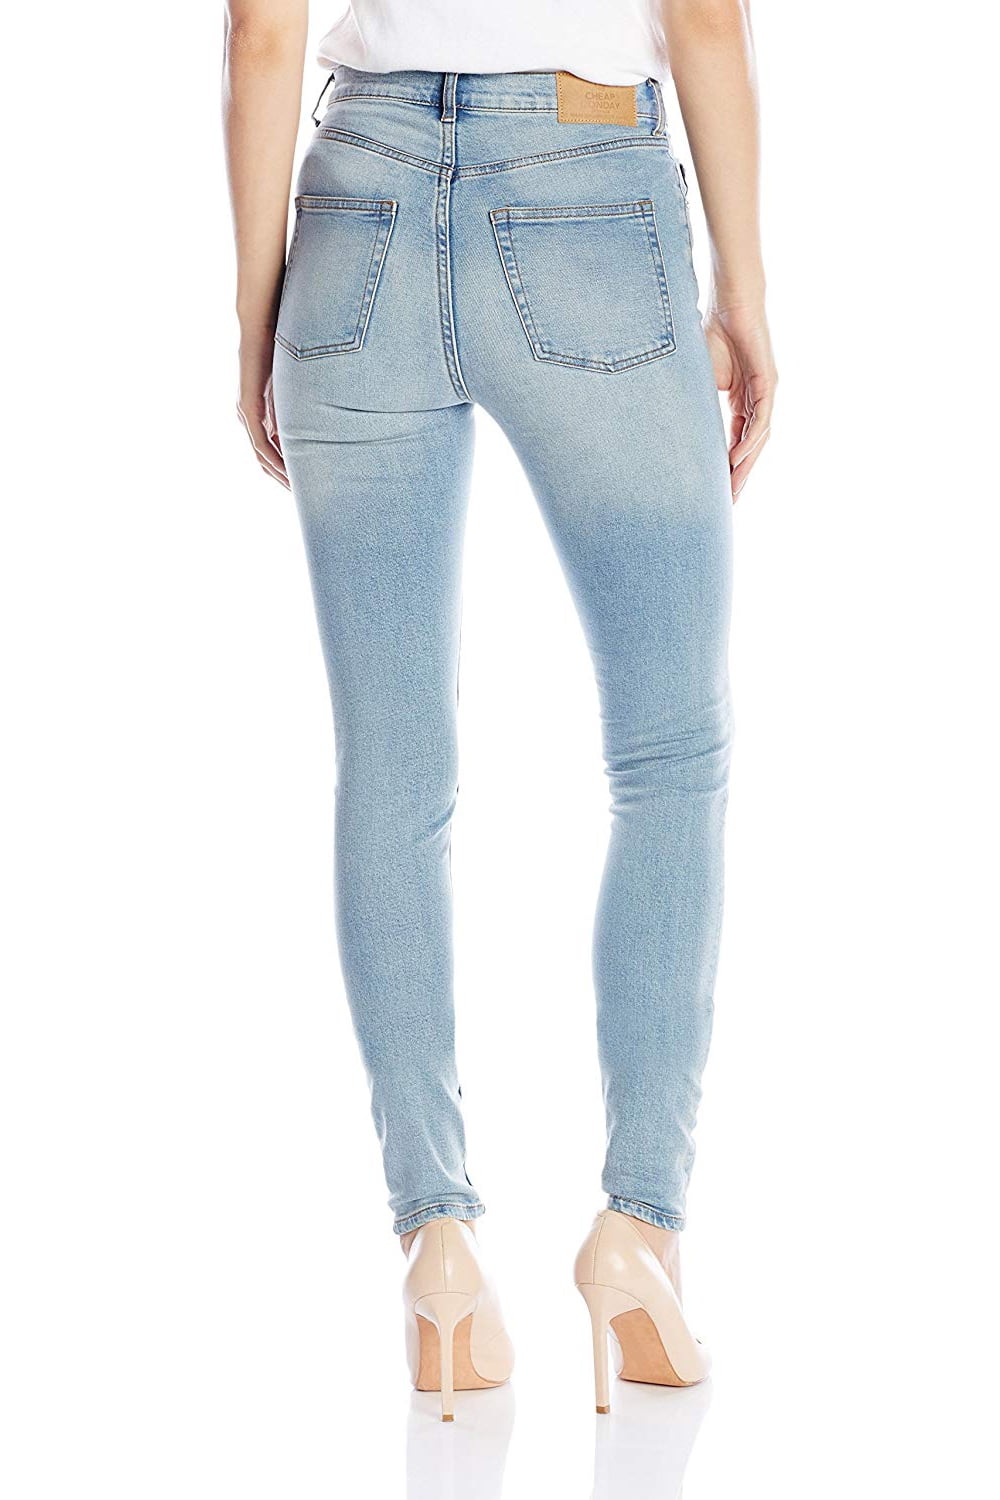 CHEAP MONDAY Women's Second Skin Jeans, Stonewash Blue, - Walmart.com